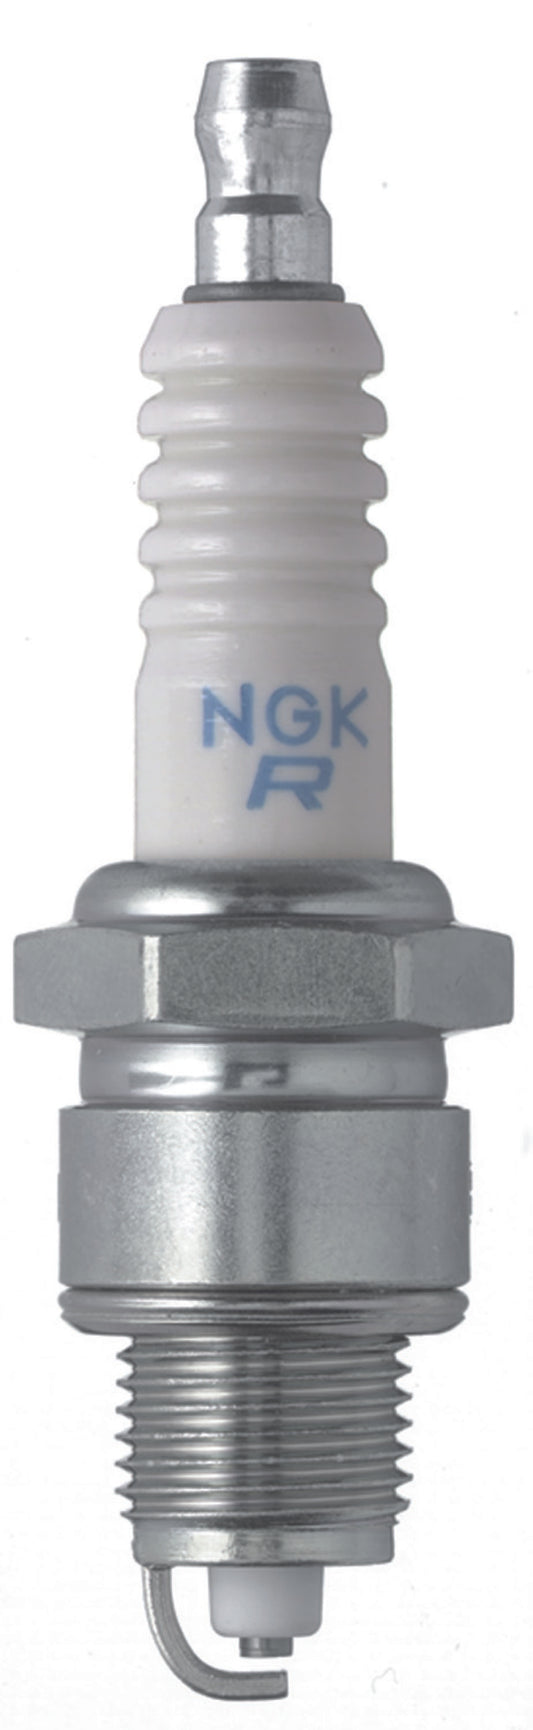 NGK Standard Spark Plug Box of 4 (BPR5HS)